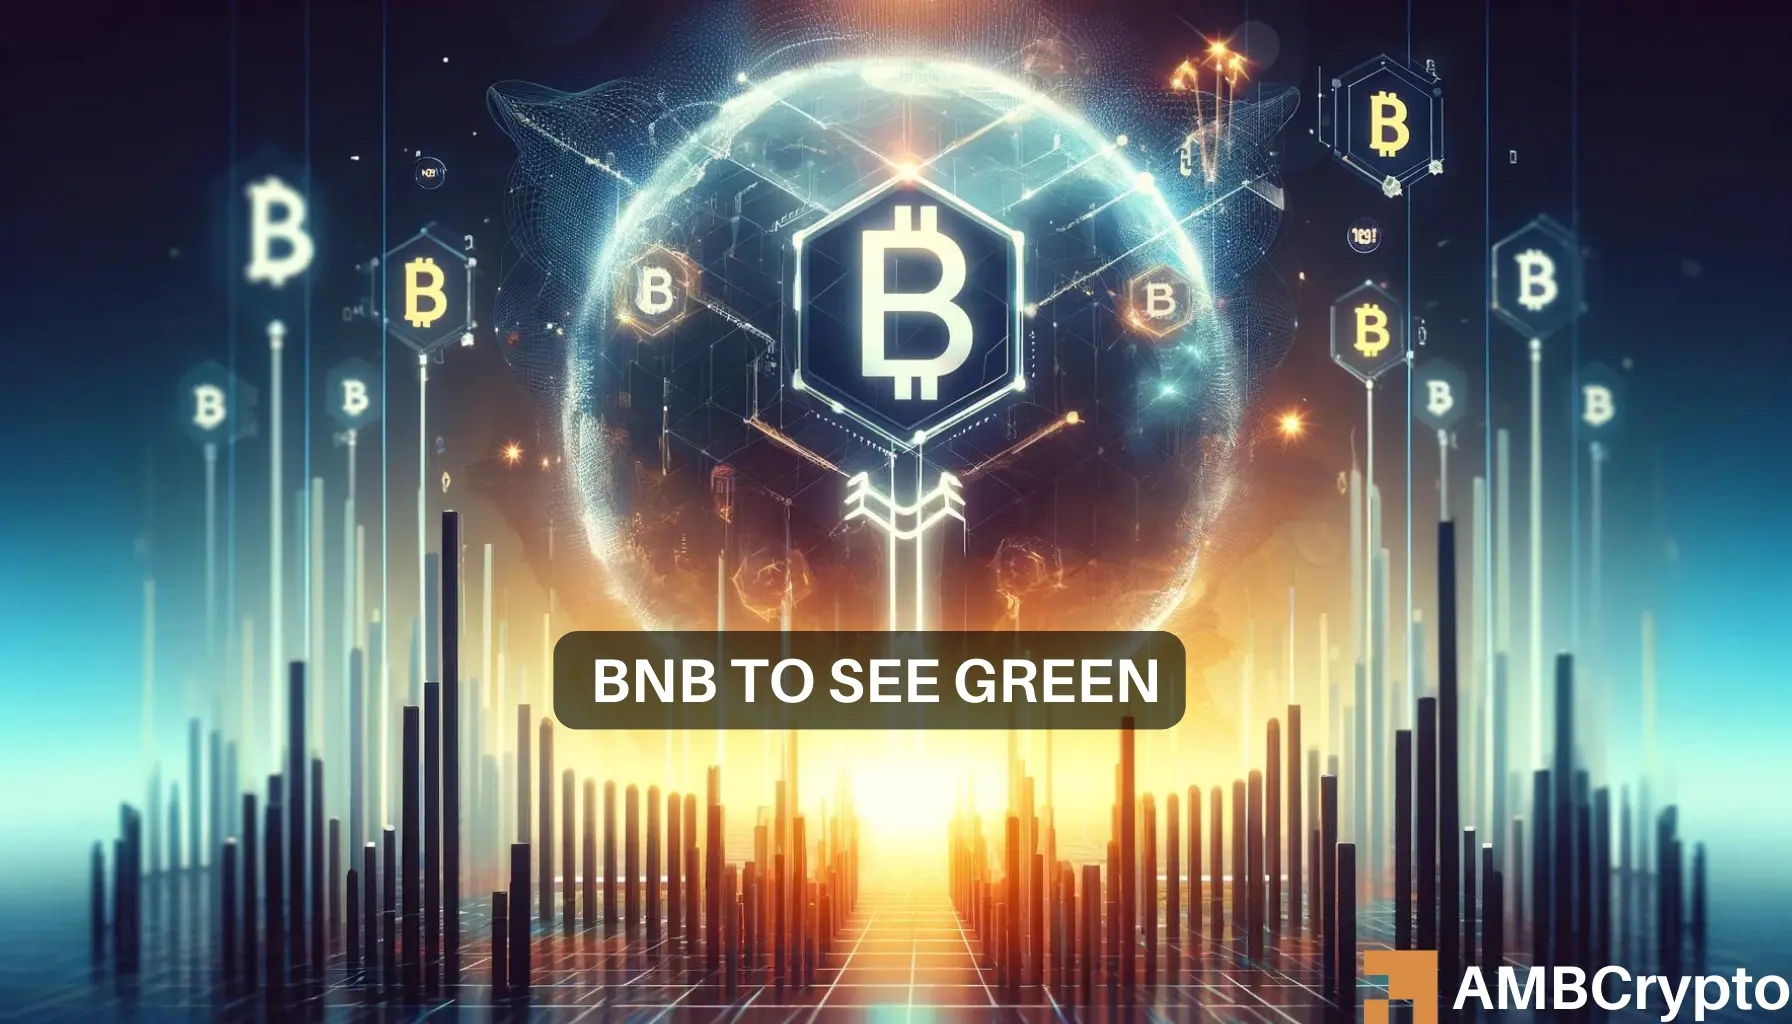 BNB network